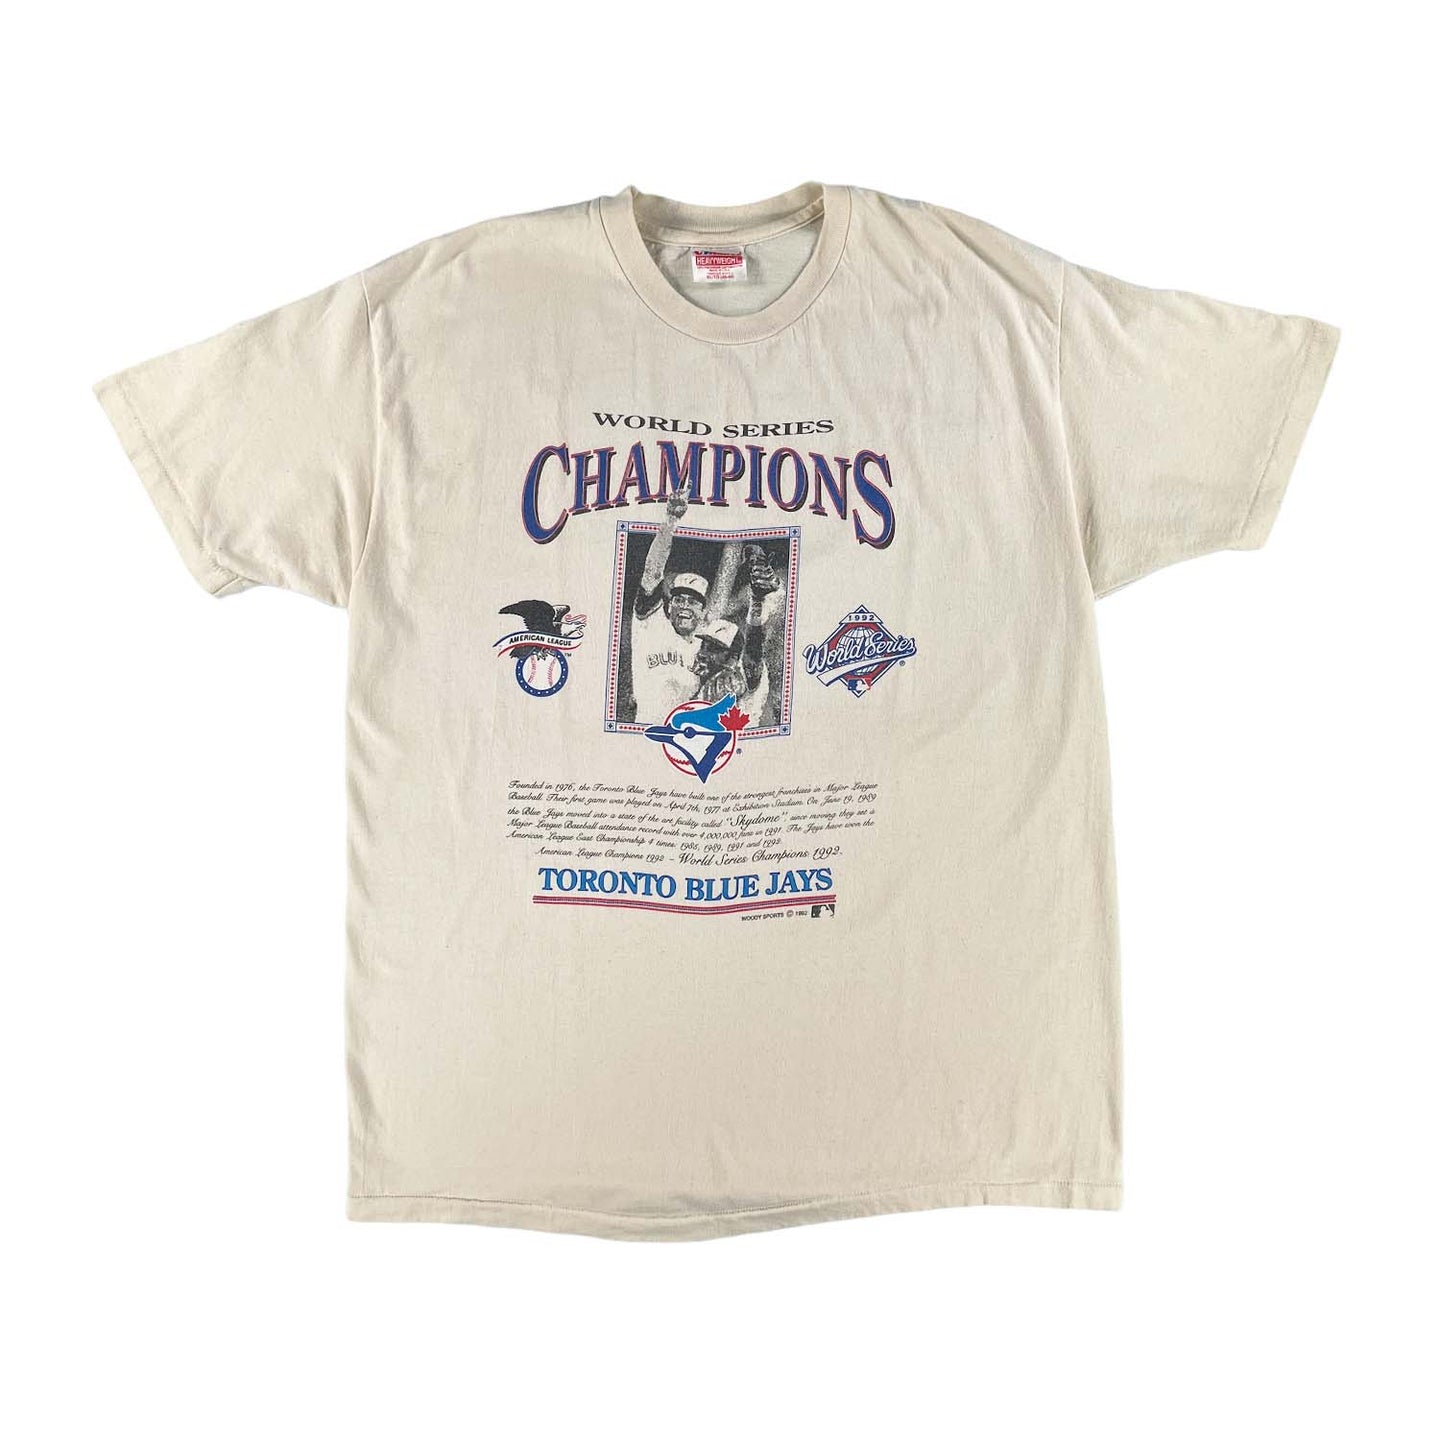 1992 Toronto Blue Jays World Series Champions tee XL